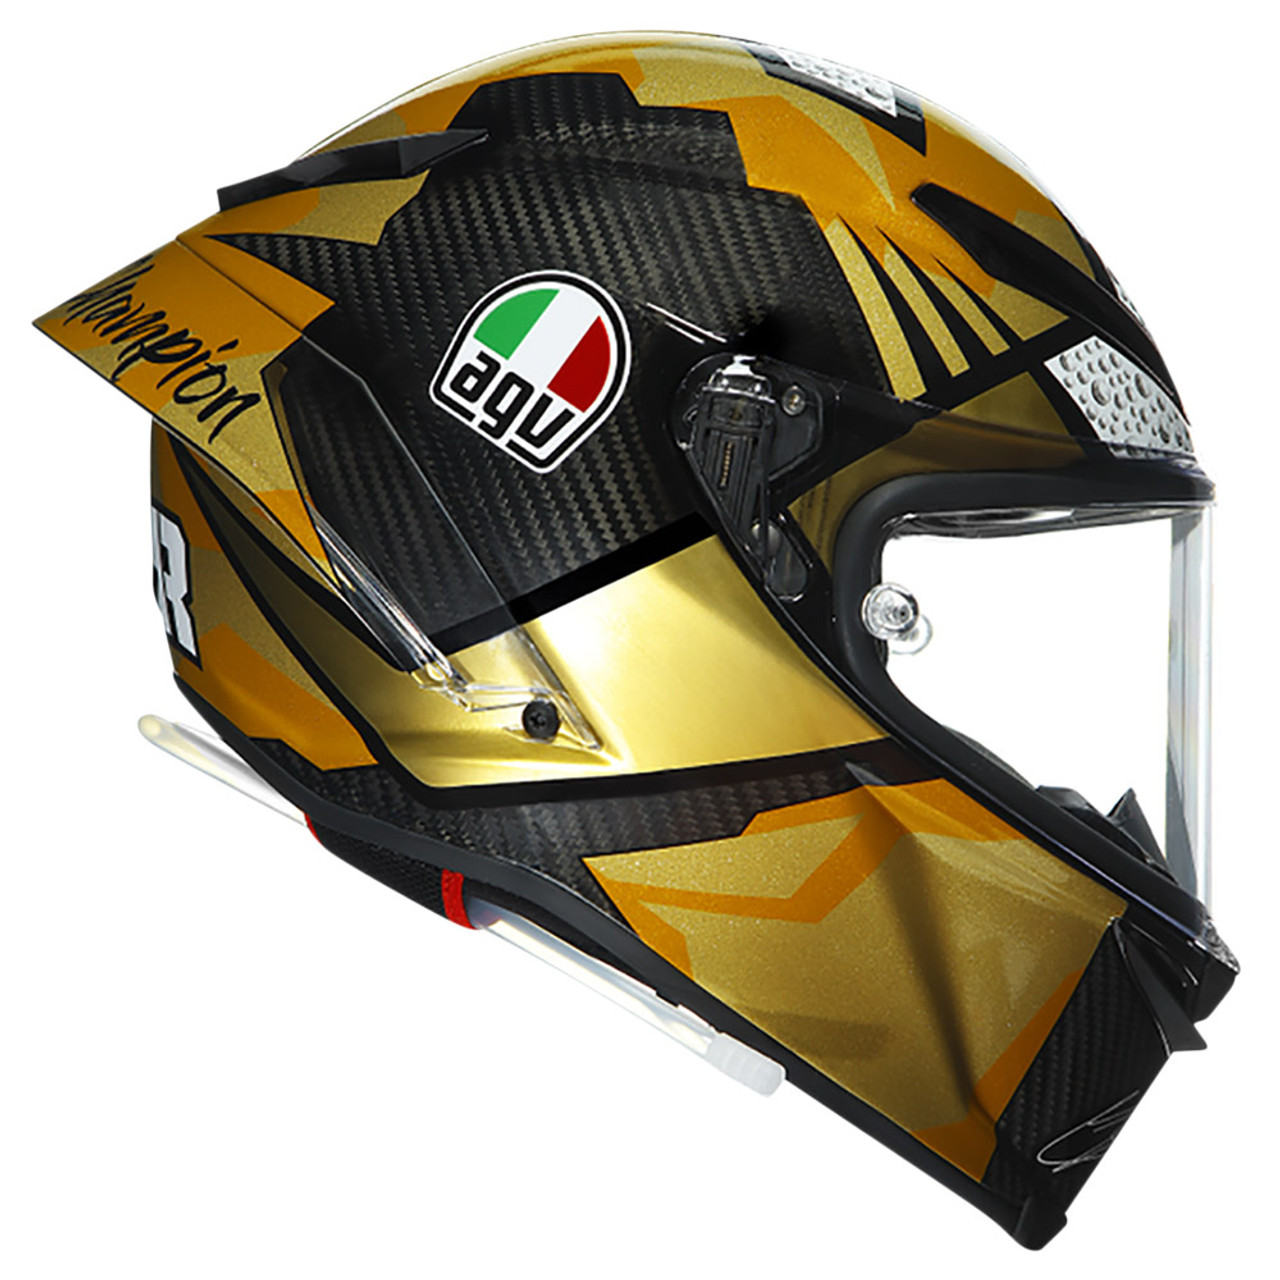 AGV Pista GP RR Limited Edition Mir World Champion 2020 Helmet